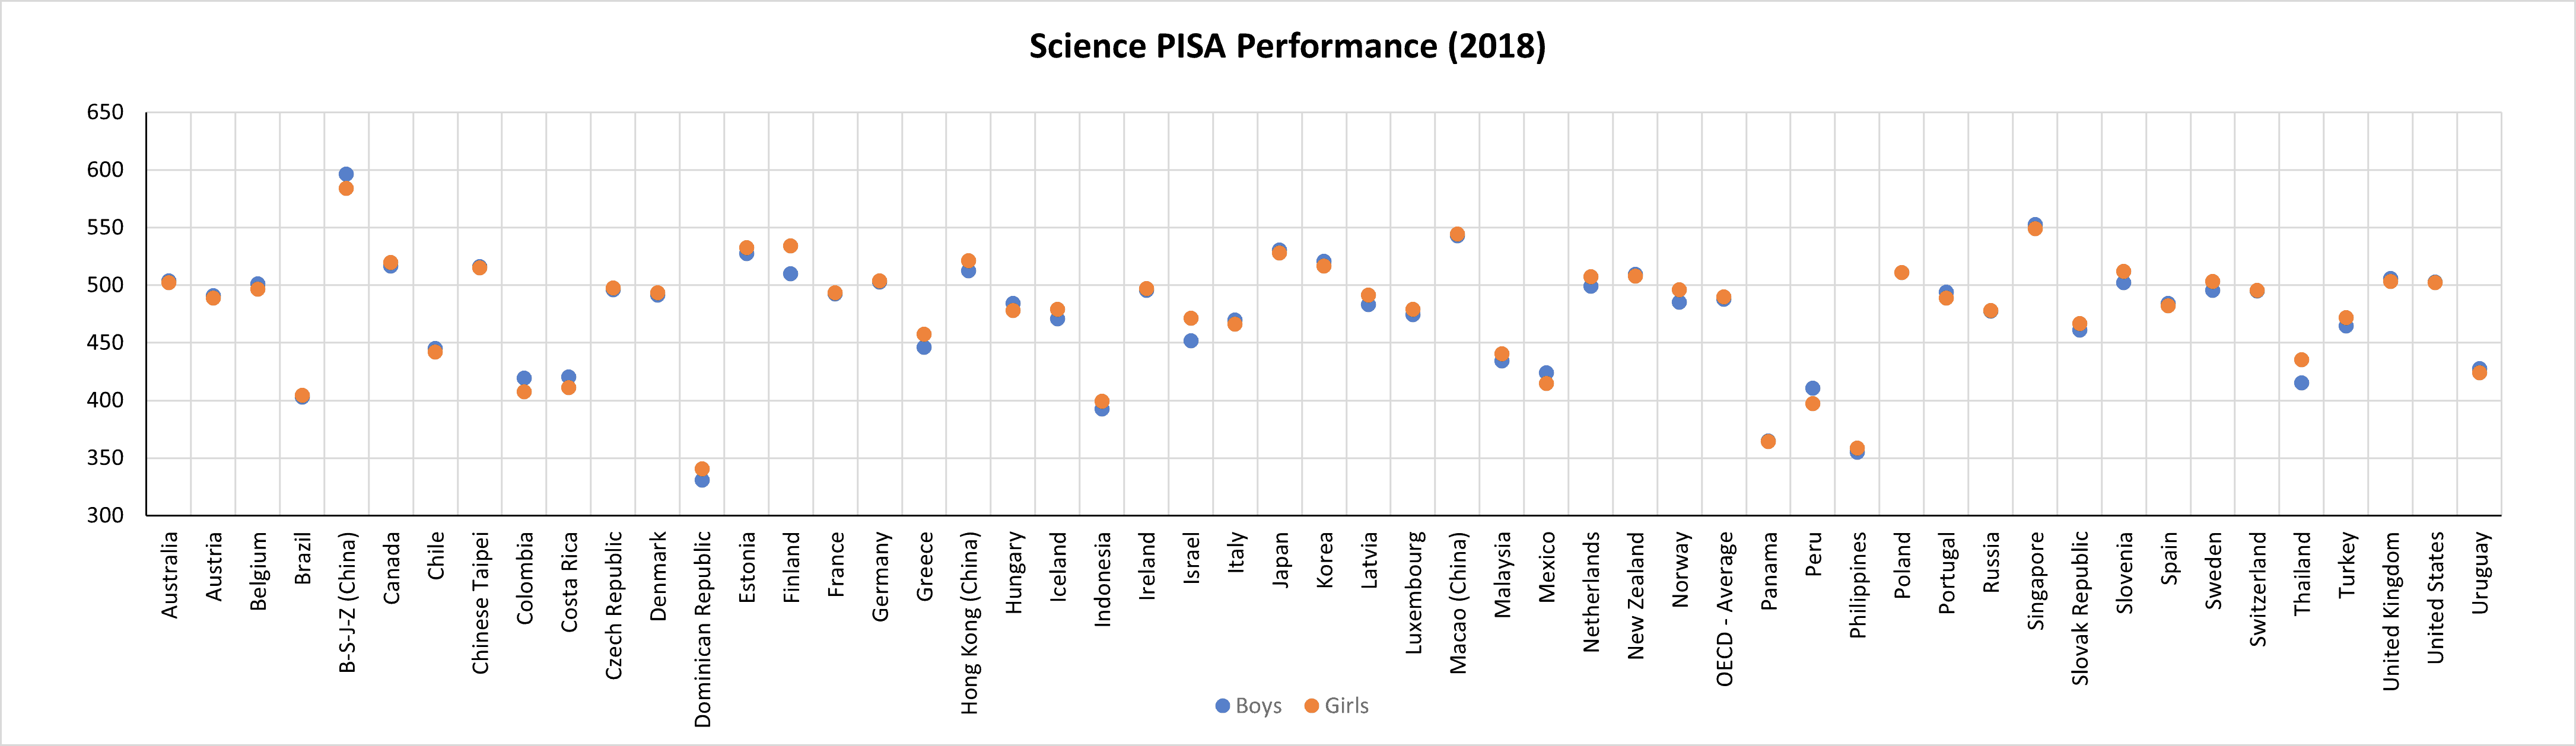 PISA science performance